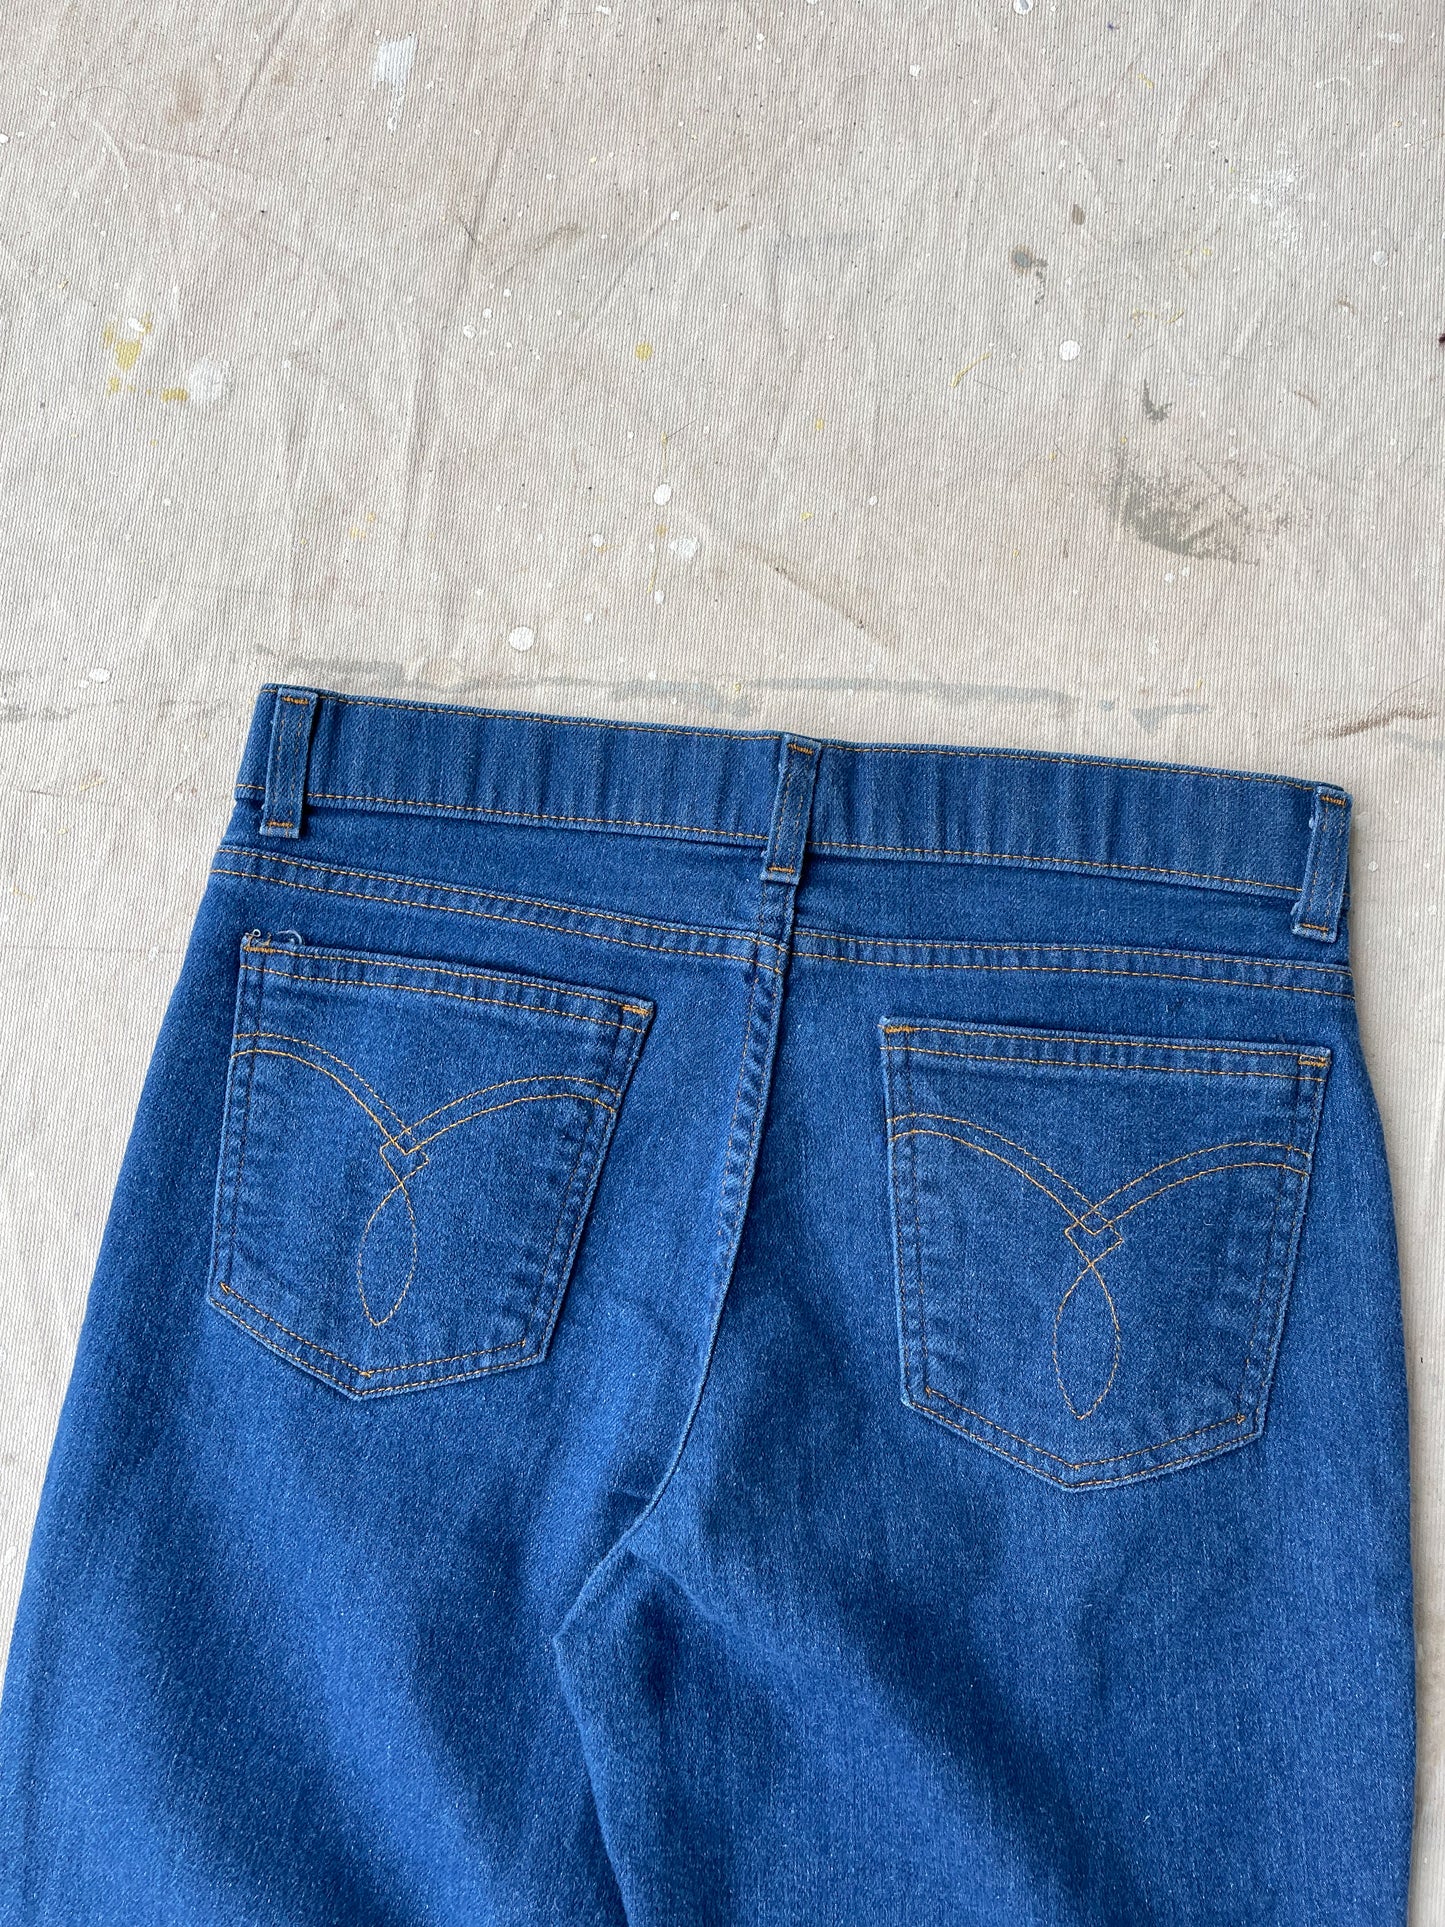 80's Levi's 514 Jeans—[30x30]